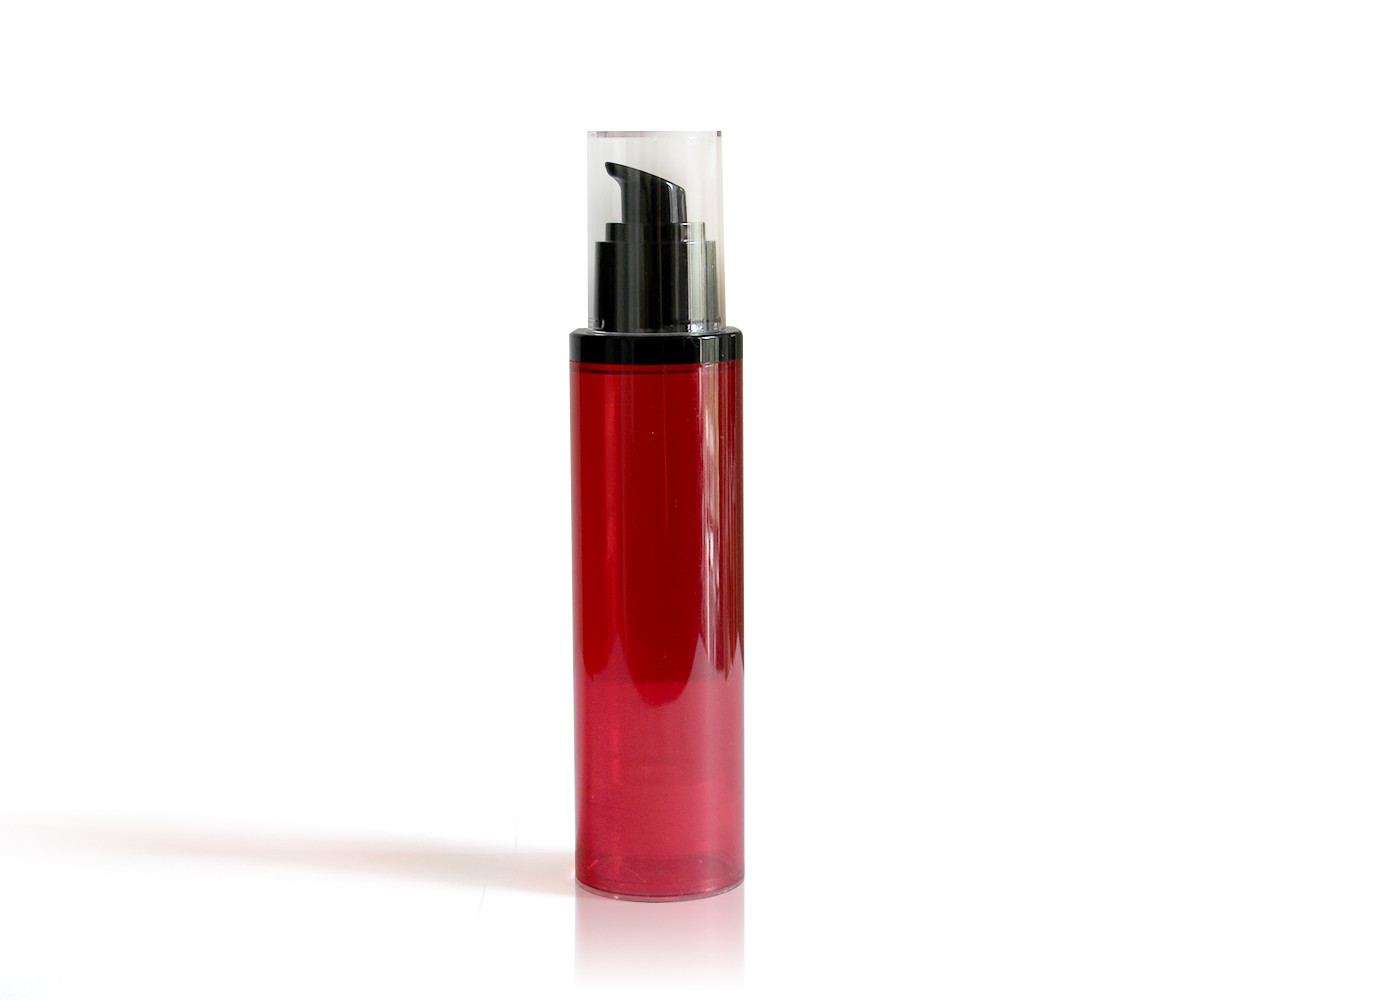  Liquid Foundation Cosmetic Pump Bottle , Moisturizers Serum Pump Bottles Manufactures